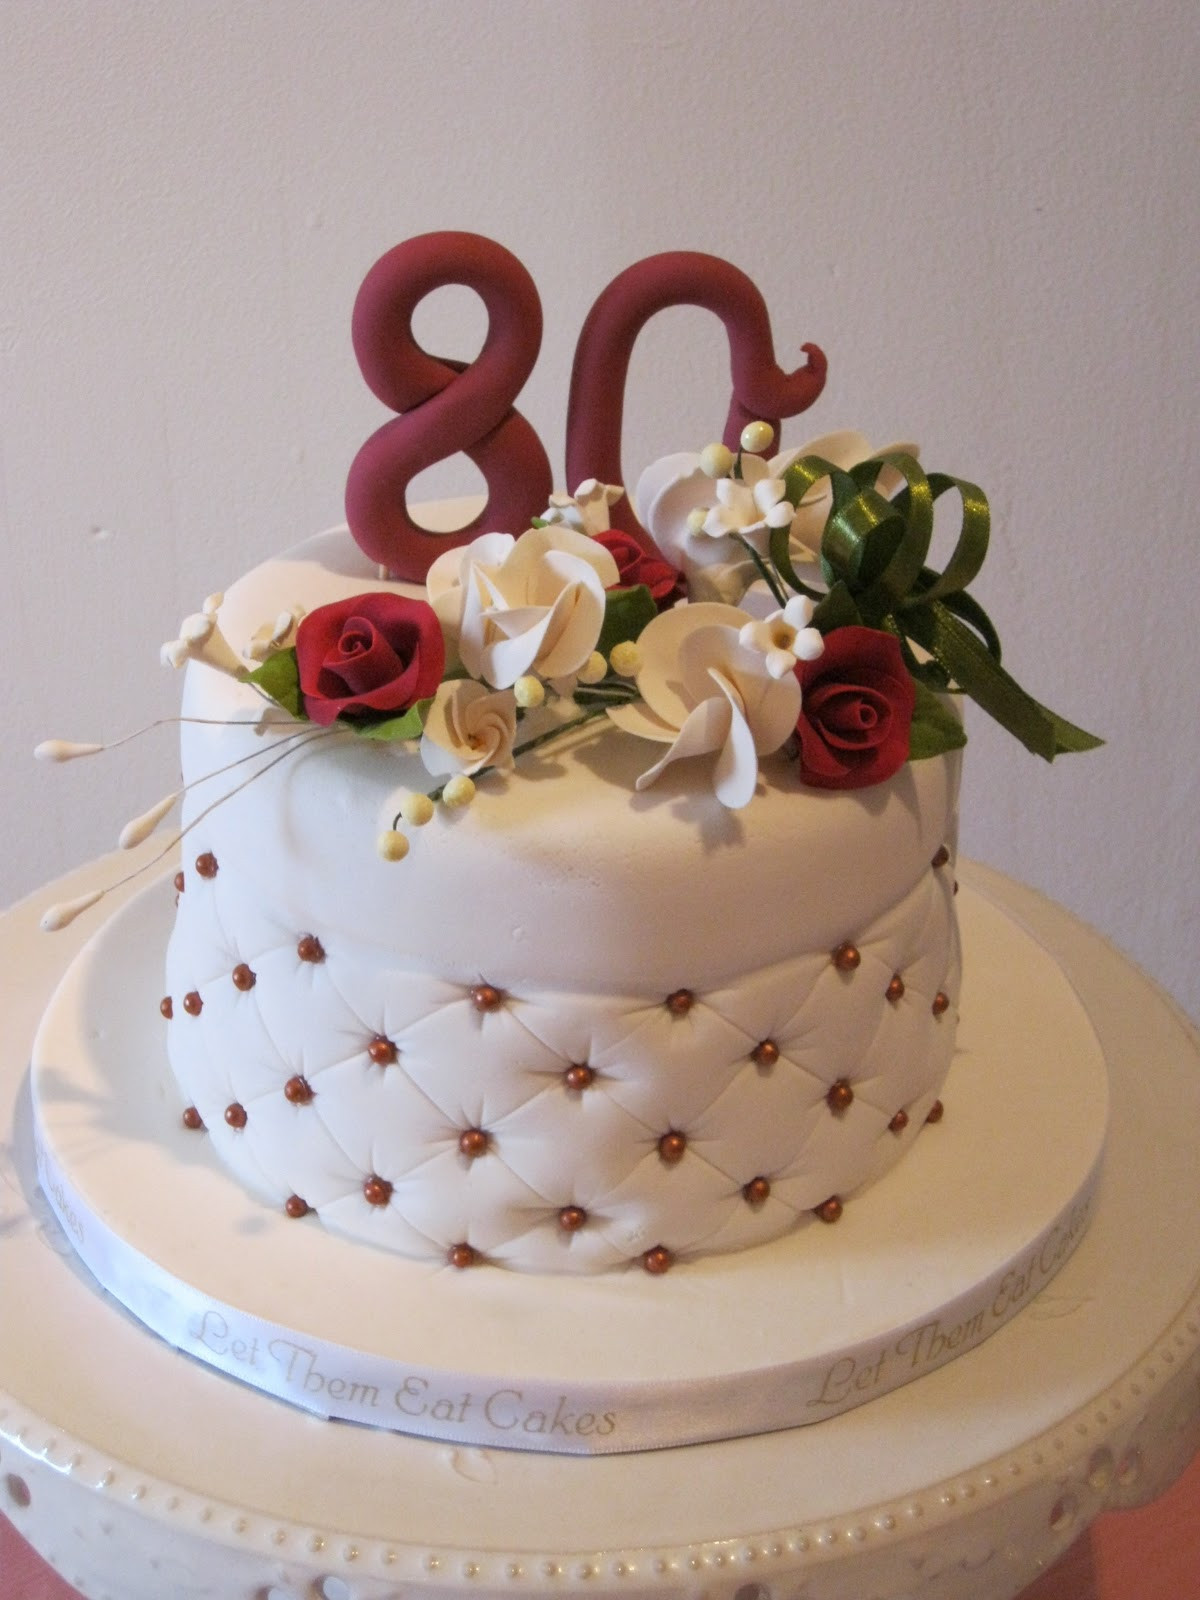 80th Birthday Cake Ideas
 Let Them Eat Cakes 80th Birthday